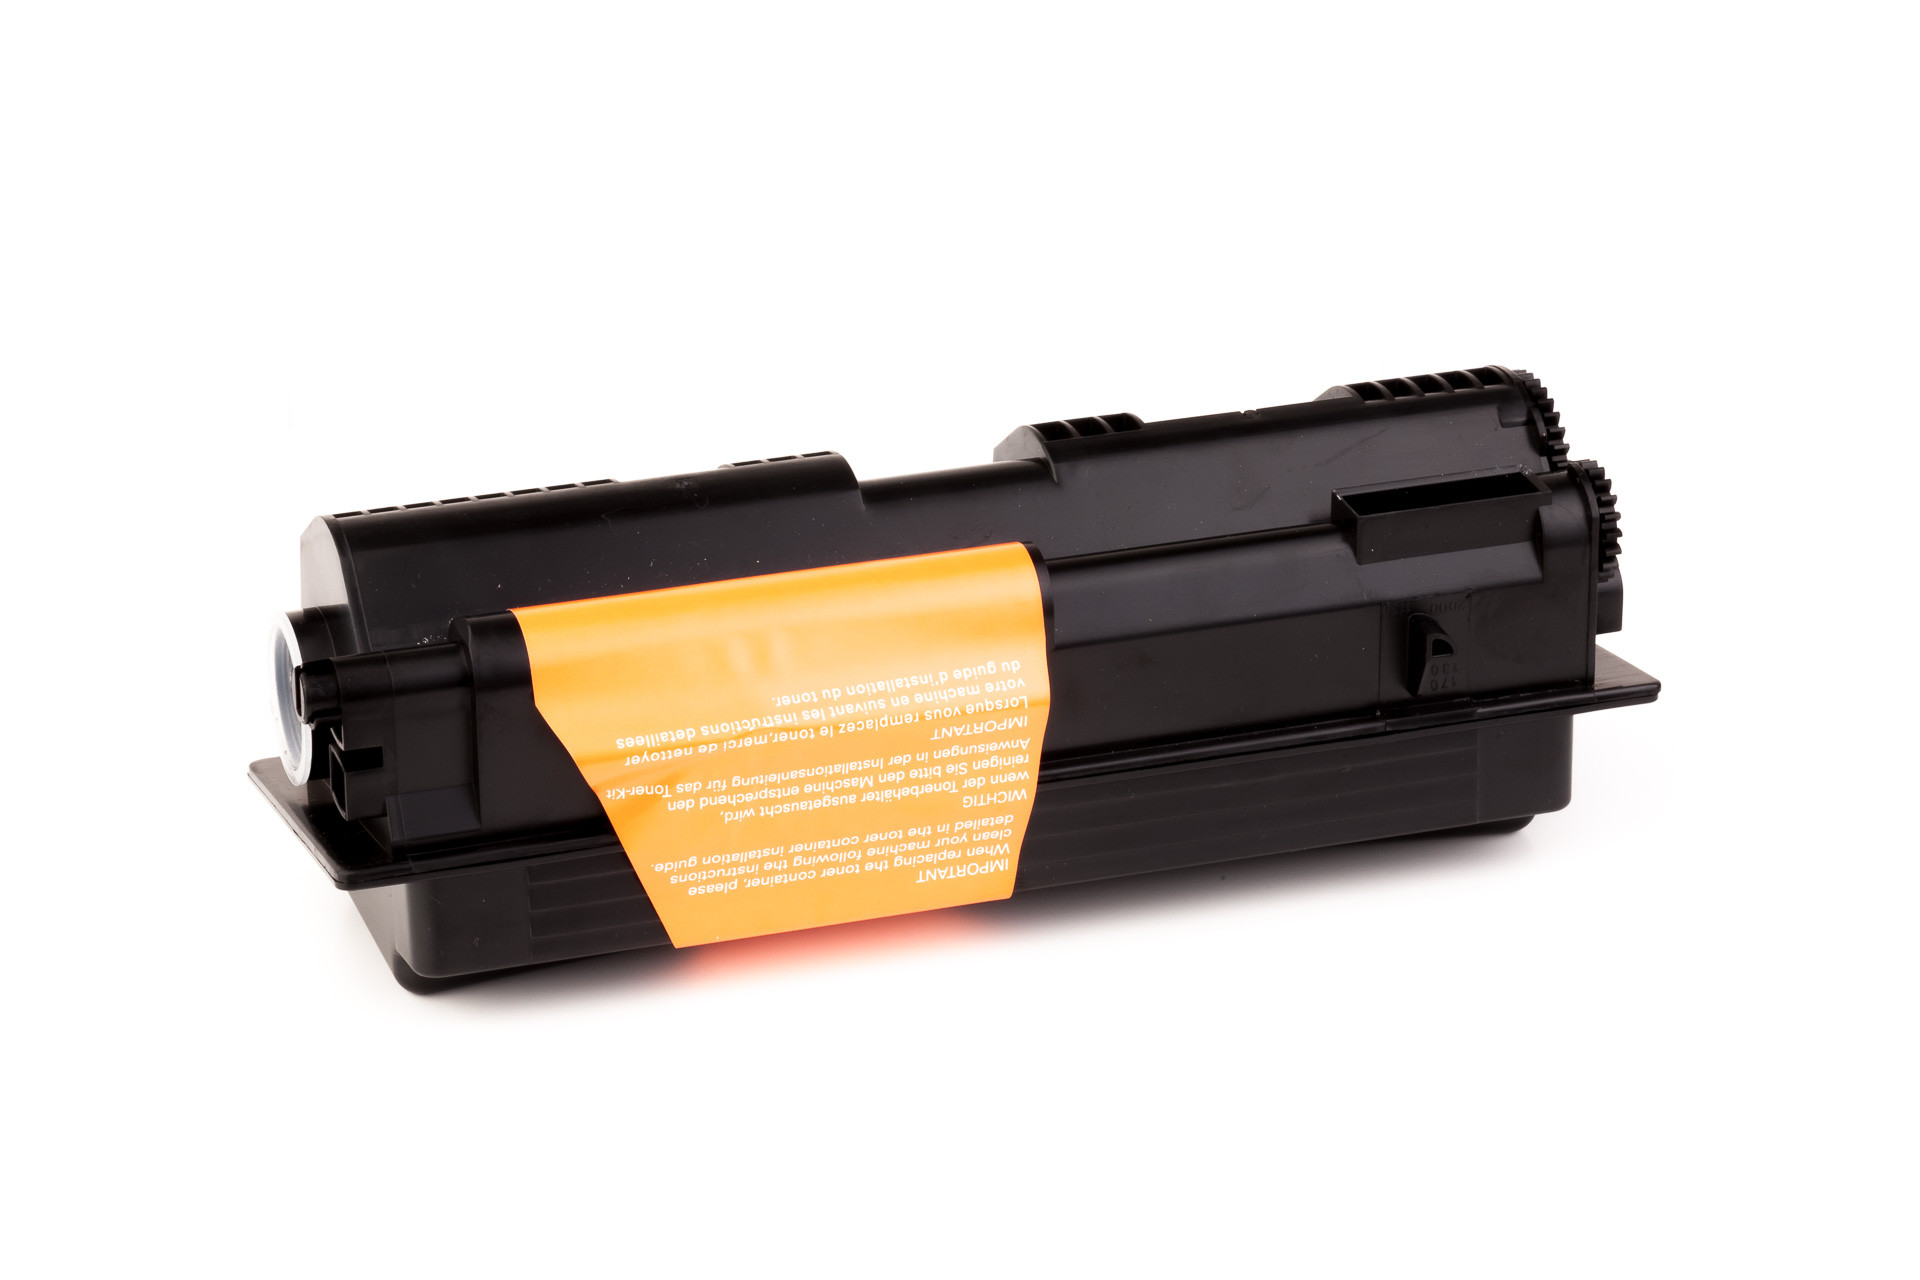 Toner cartridge (alternative) compatible with Kyocera FS 1100 N/Arztdrucker